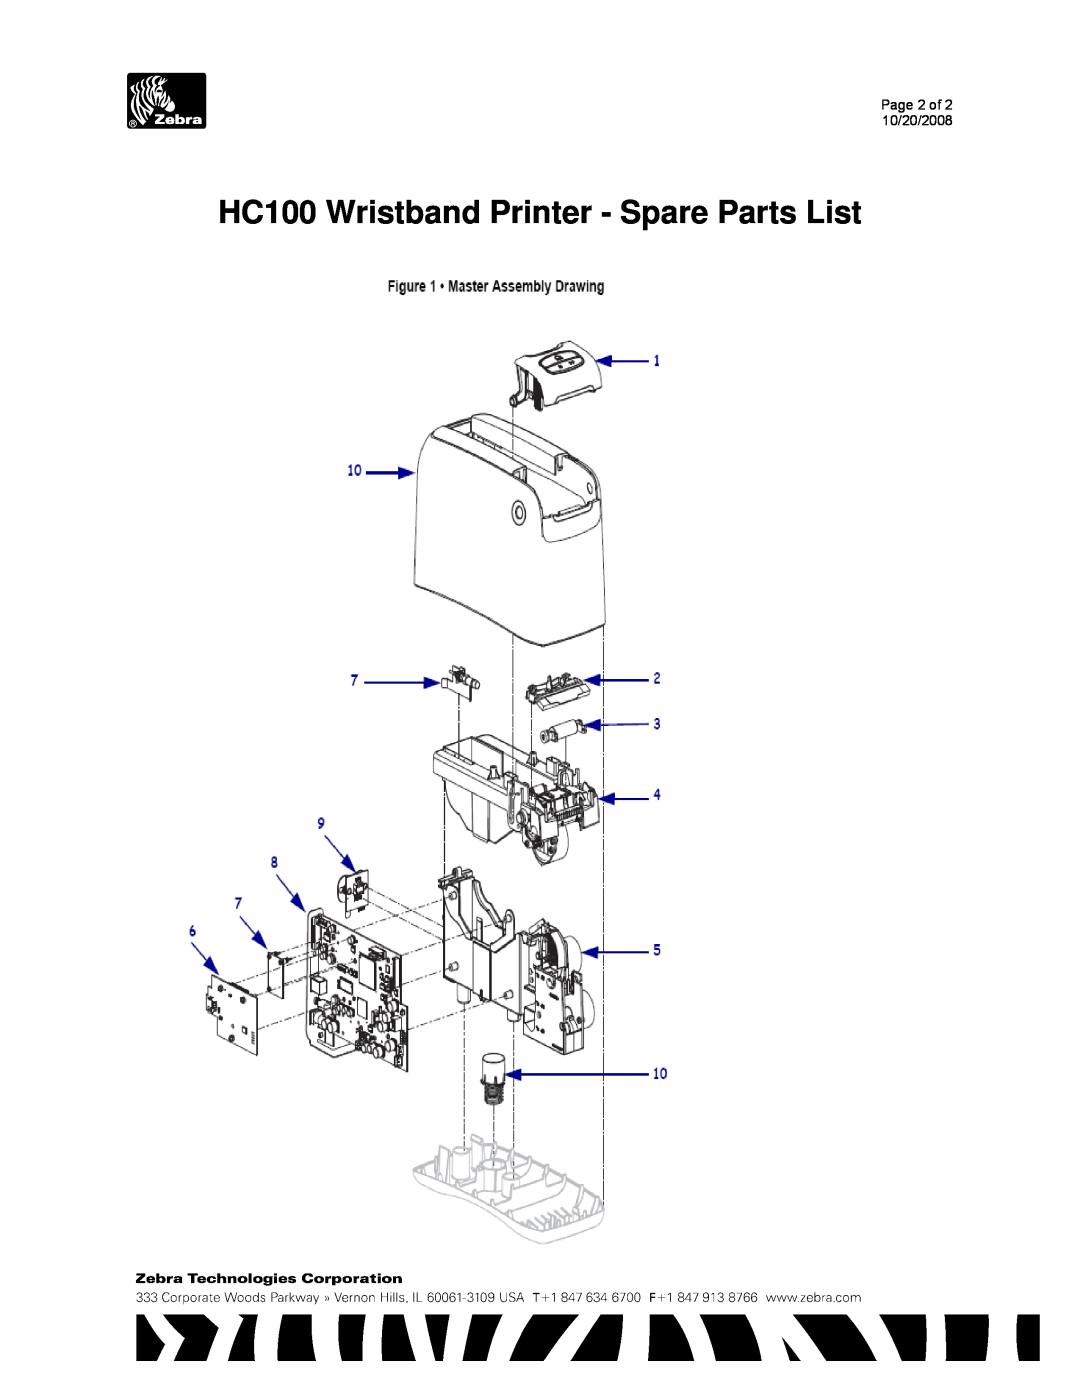 Zebra Technologies manual Page 2 of 2 10/20/2008, HC100 Wristband Printer - Spare Parts List 